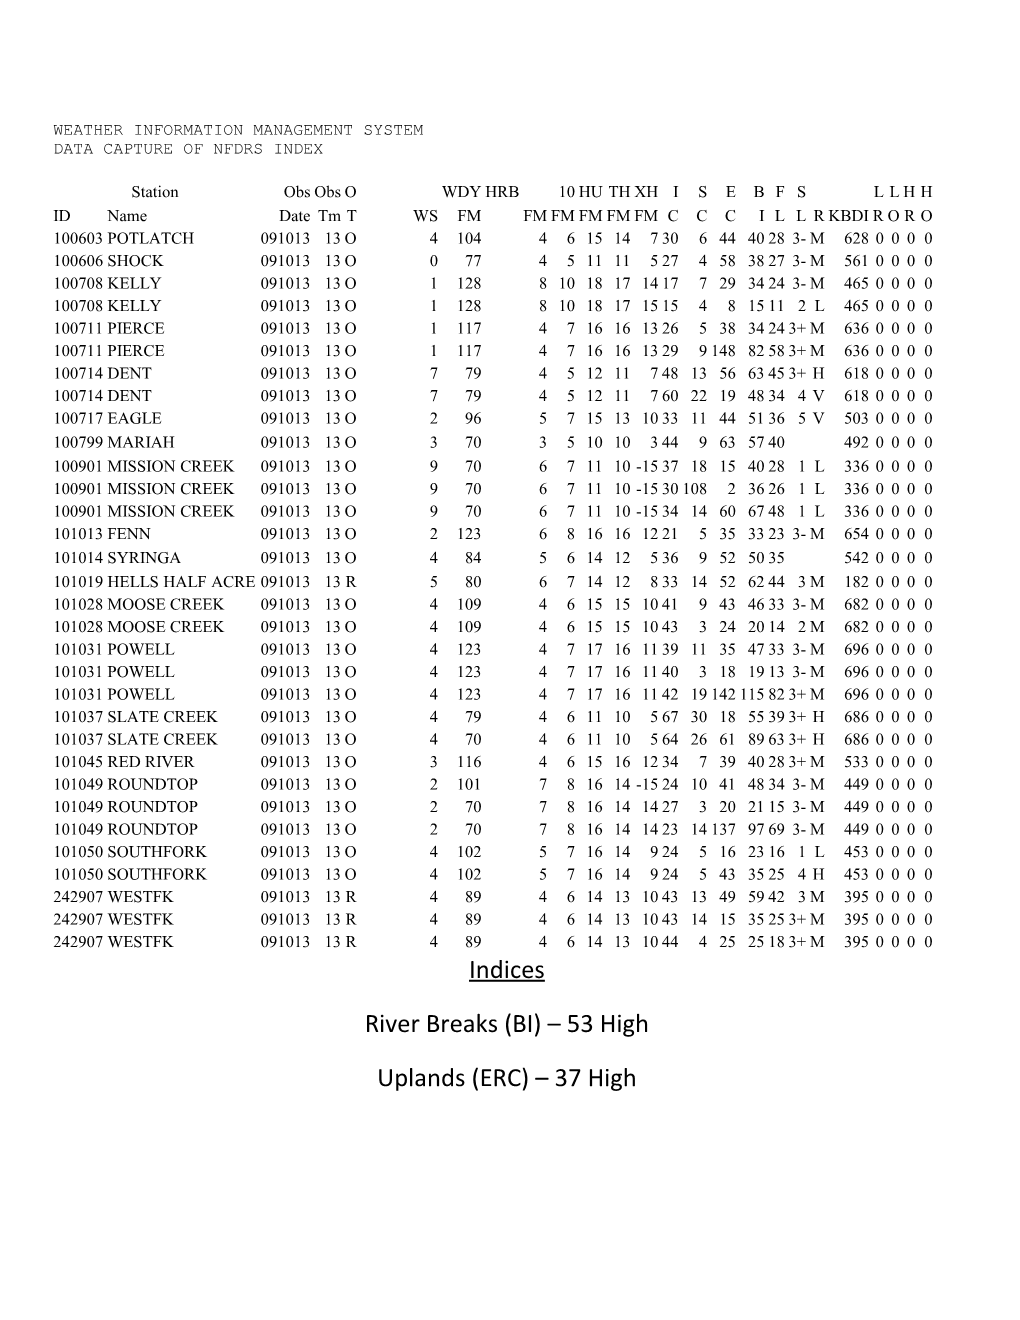 Weather Information Management System Data Capture of Nfdrs Index